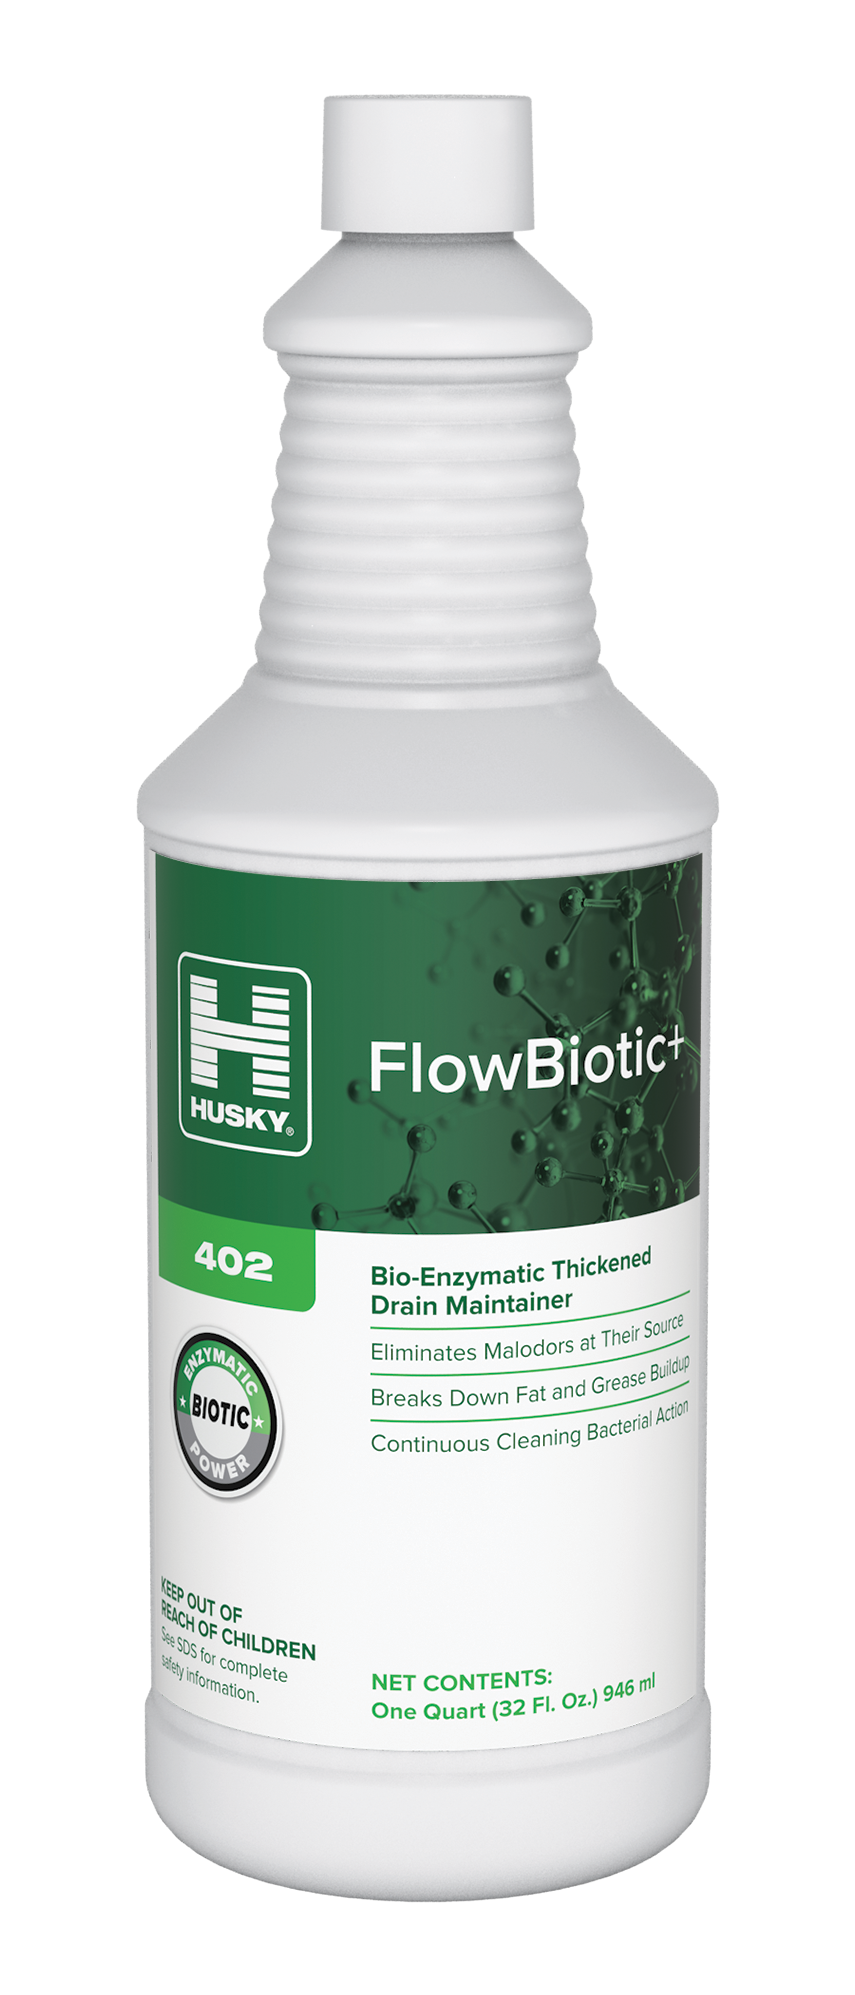 Husky 402 FlowBiotic+ 
Bio-Enzymatic Thickened Drain 
Maintainer - (12qts/cs)